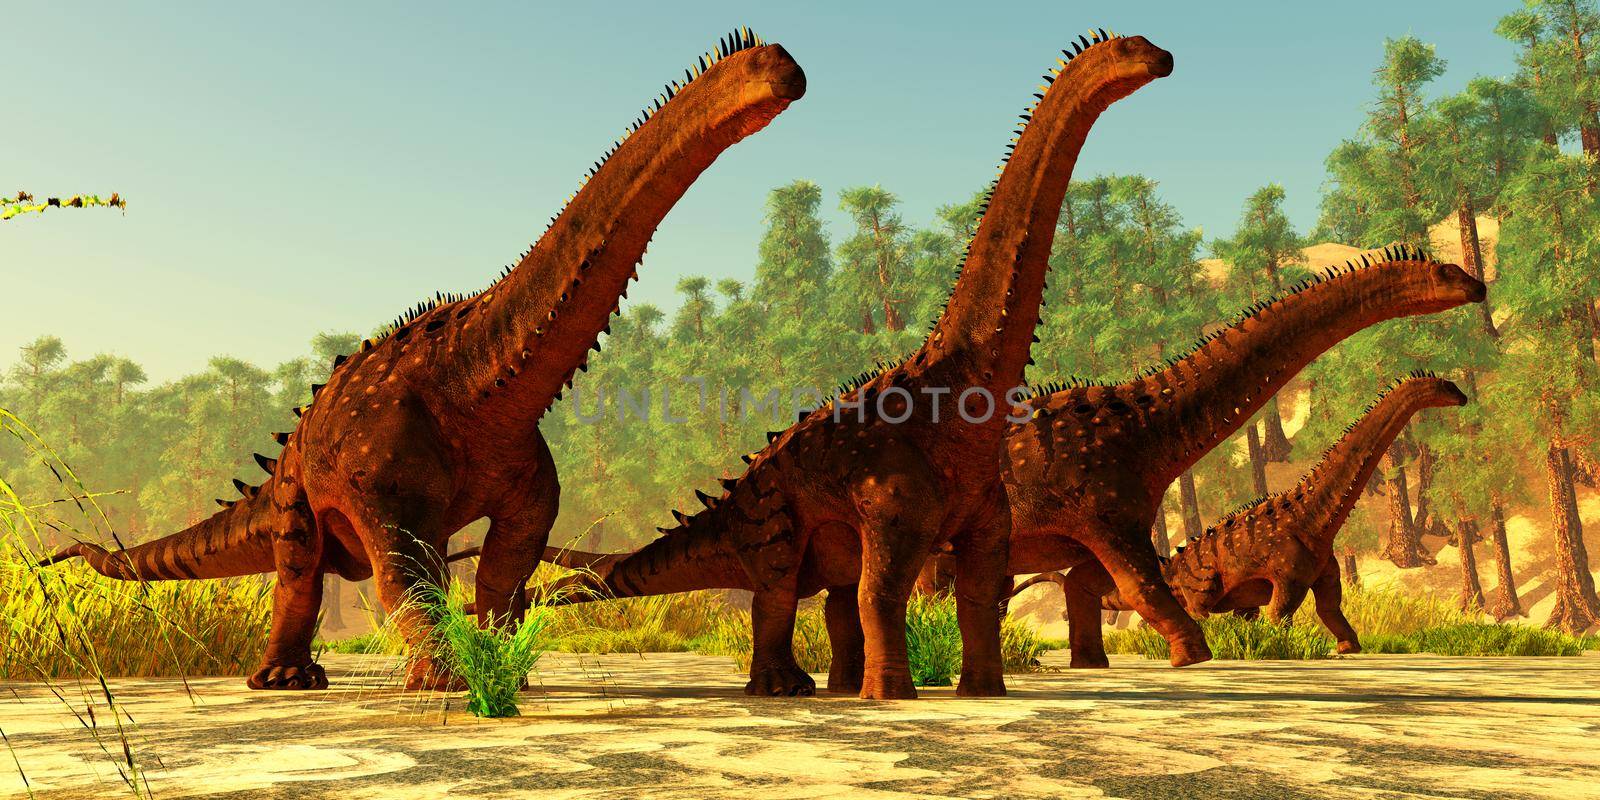 Alamosaurus Misty Day by Catmando